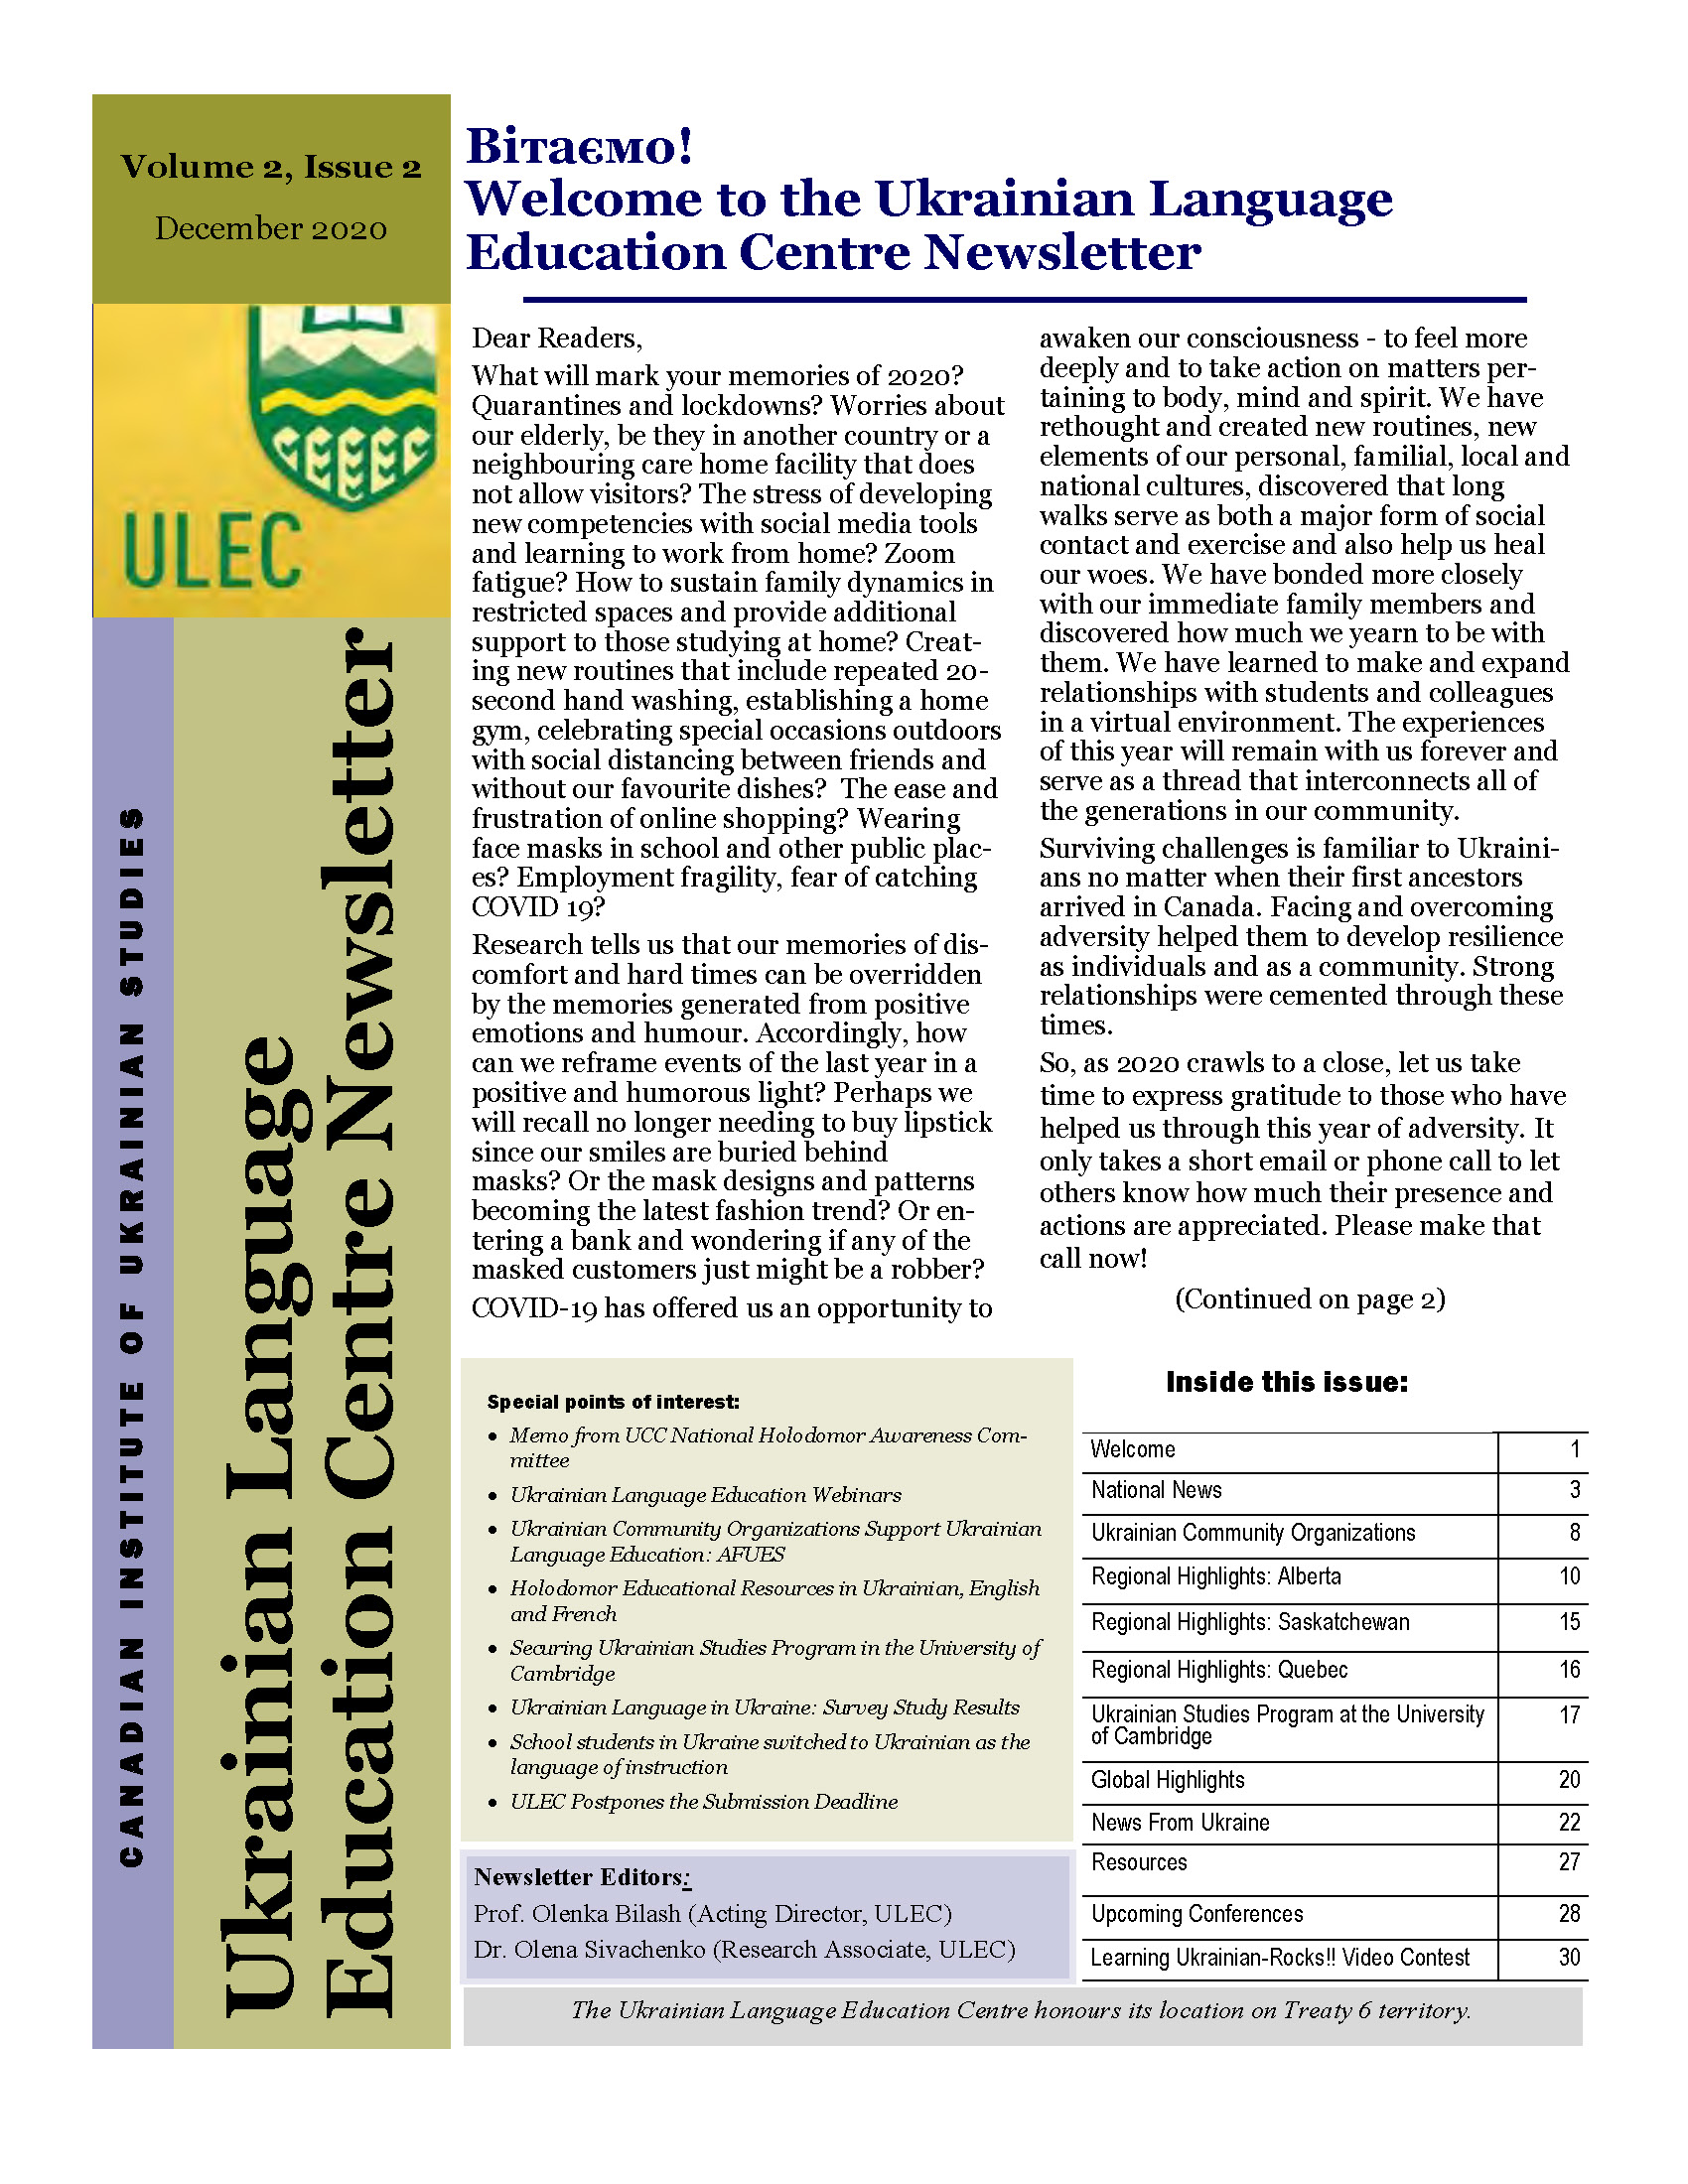 ulec-newsletter_vol.-2_issue-2-1_page_01.jpg